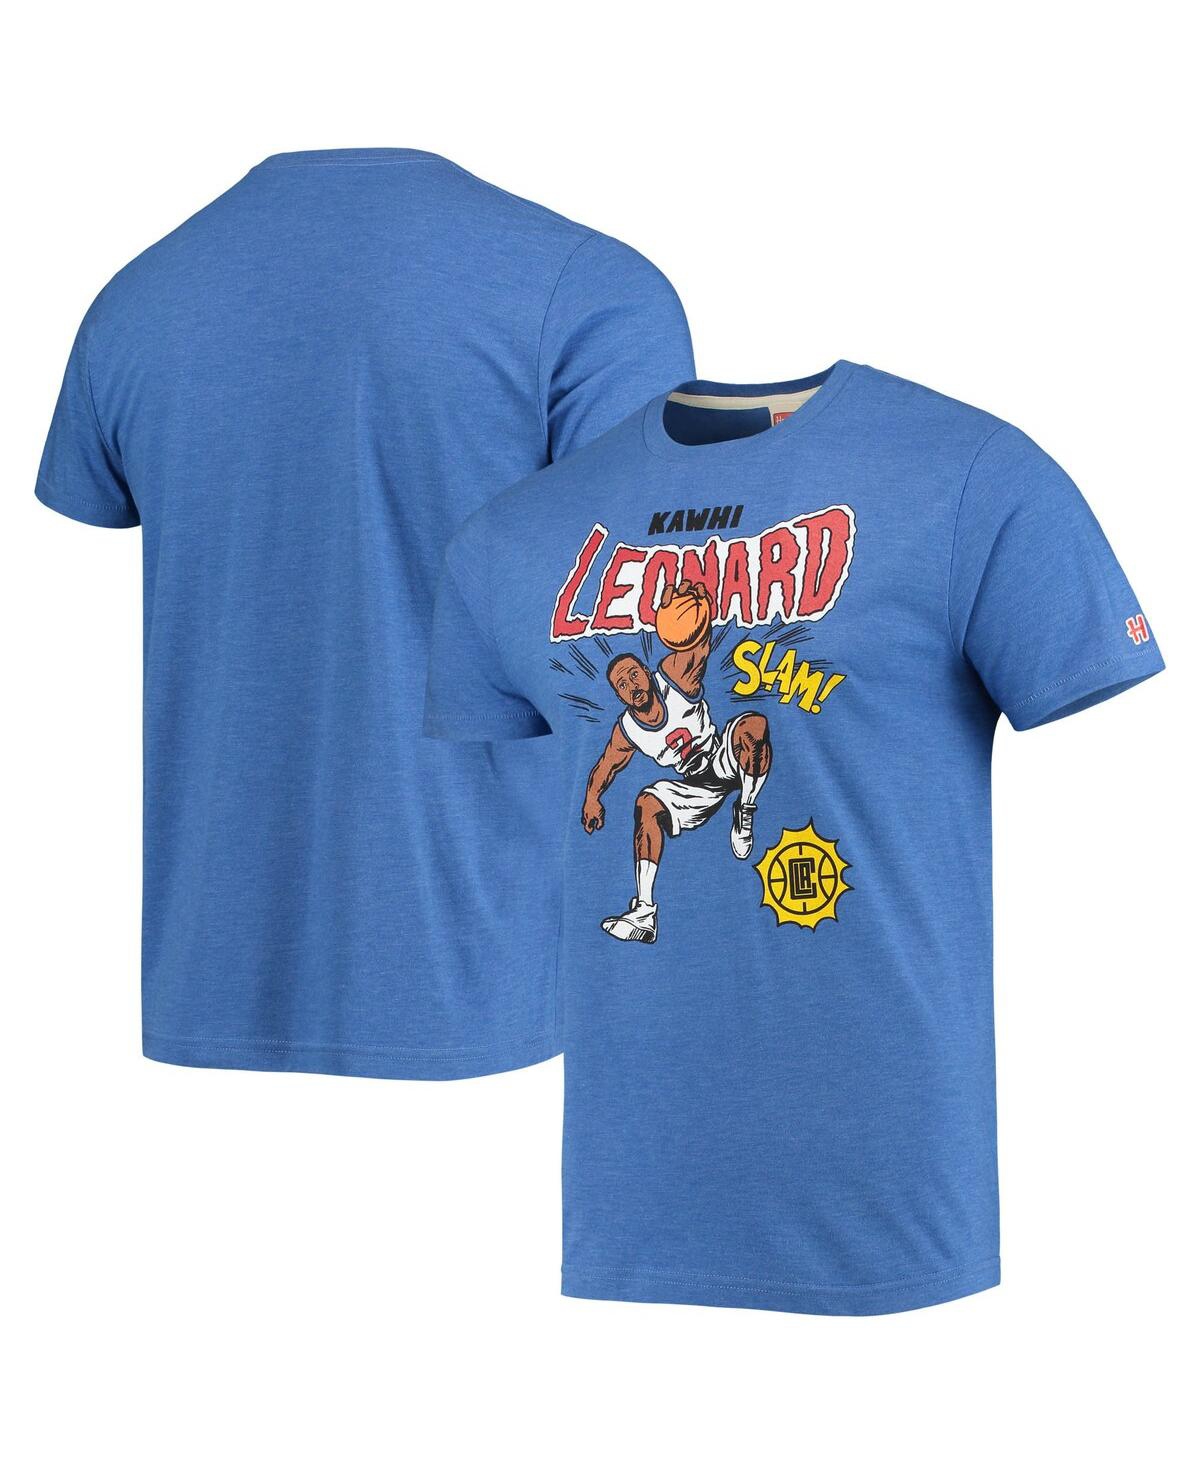 Men's Kawhi Leonard Royal La Clippers Comic Book Player Tri-Blend T-shirt - Royal